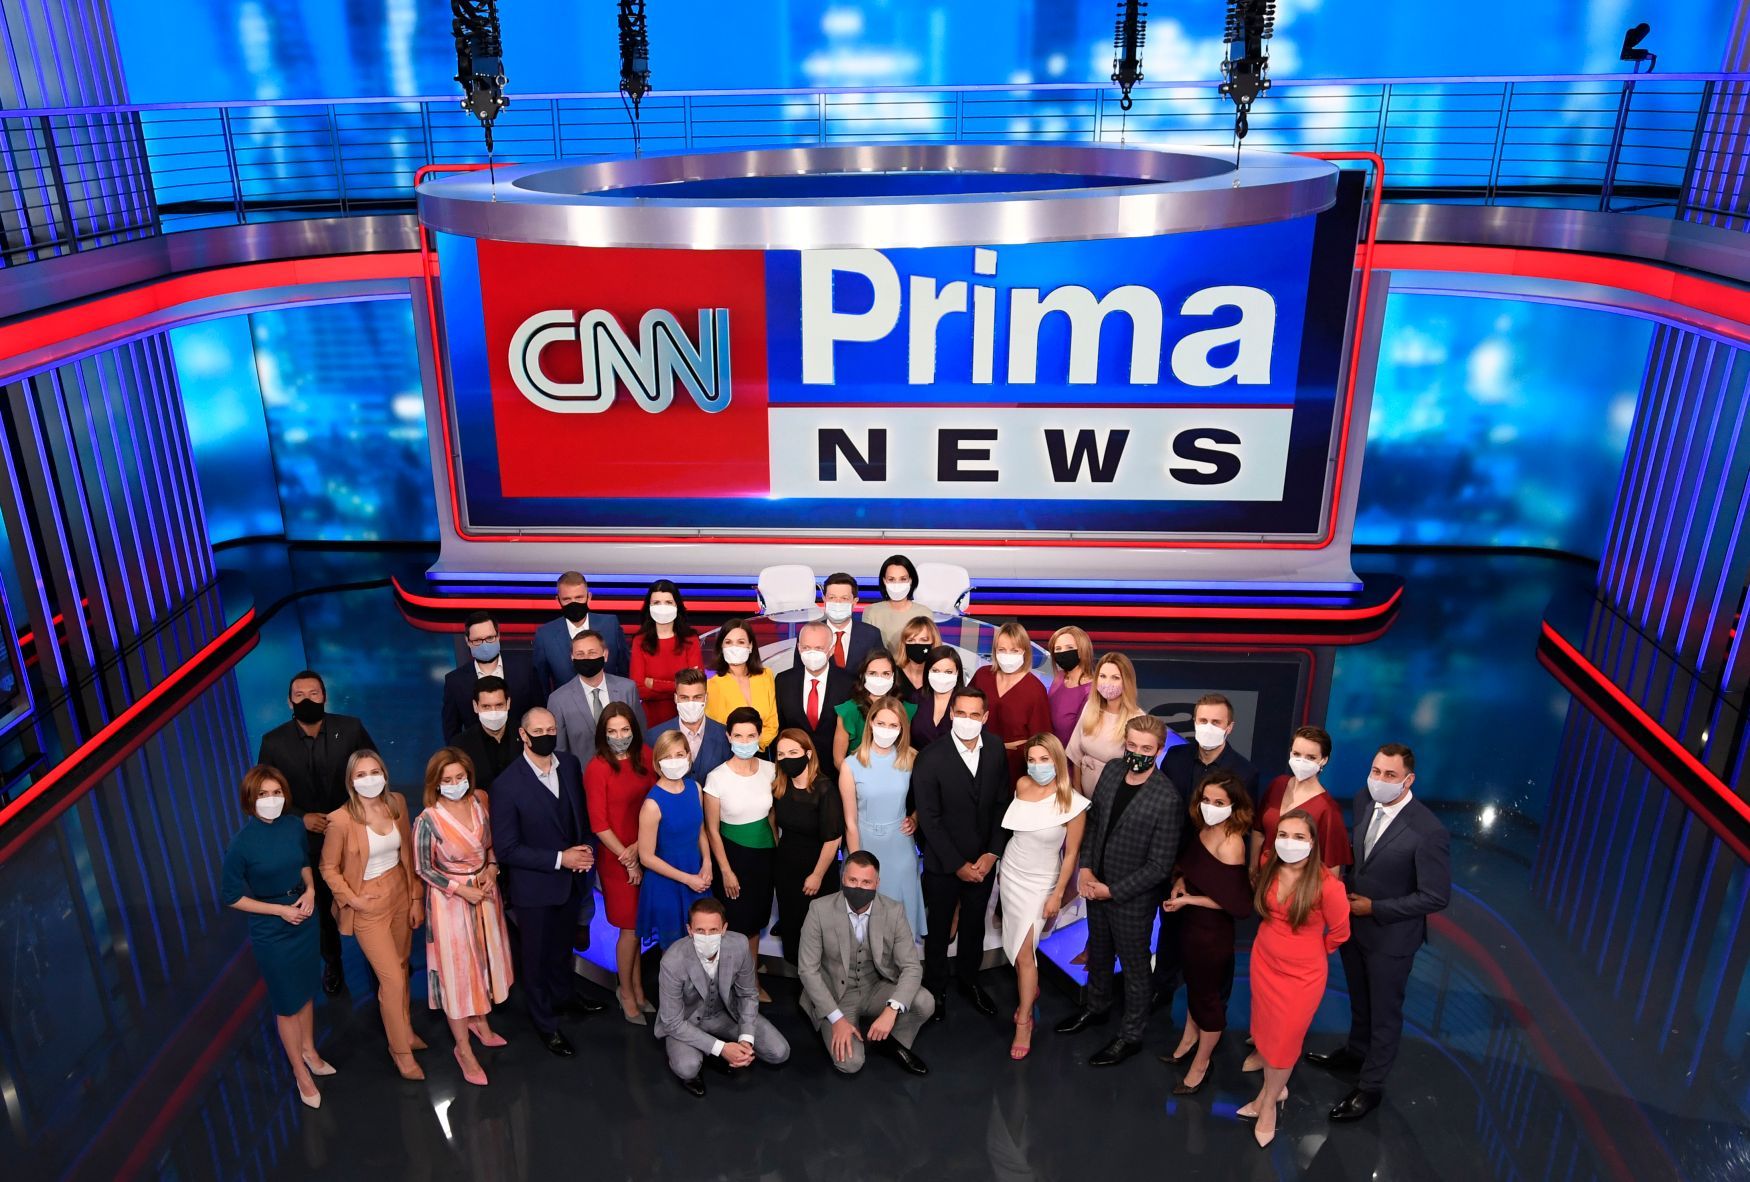 CNN Prima News